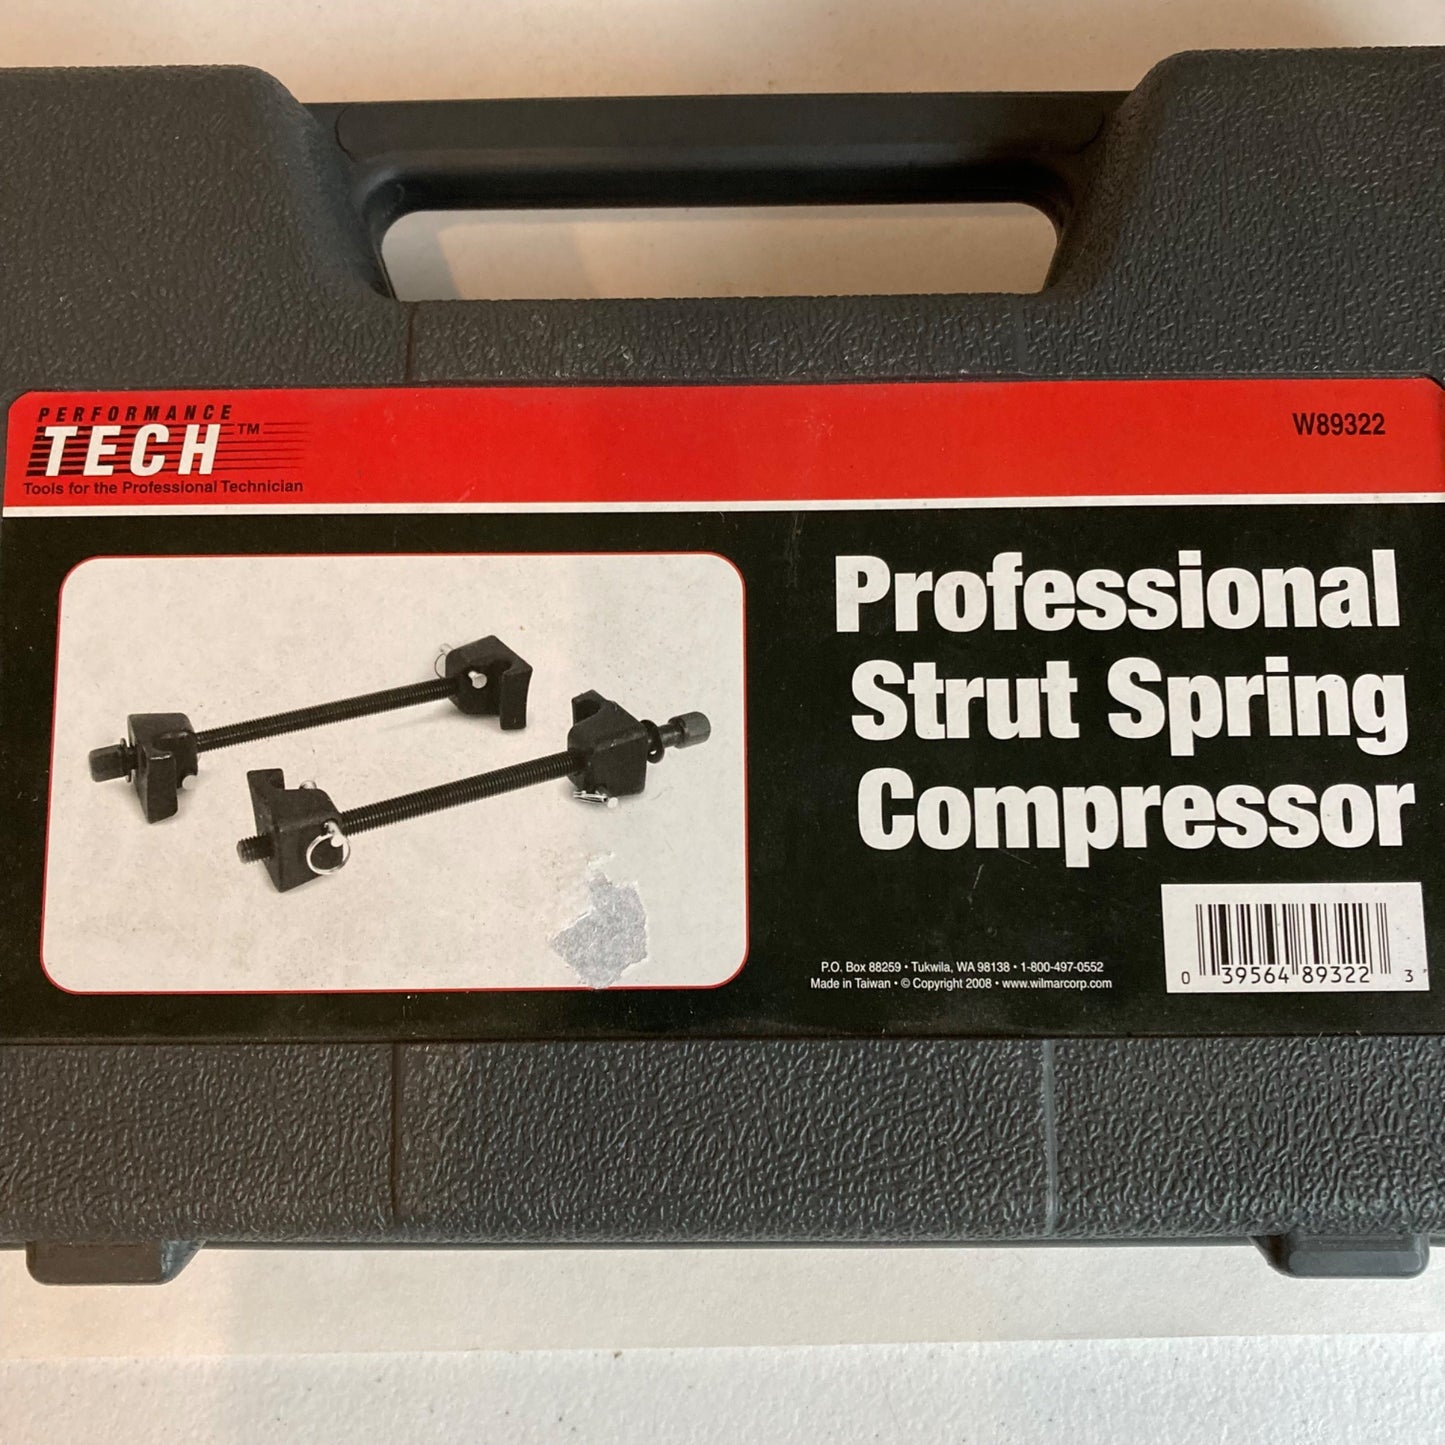 Performance Tech Professional Strut Spring Compressor W89322